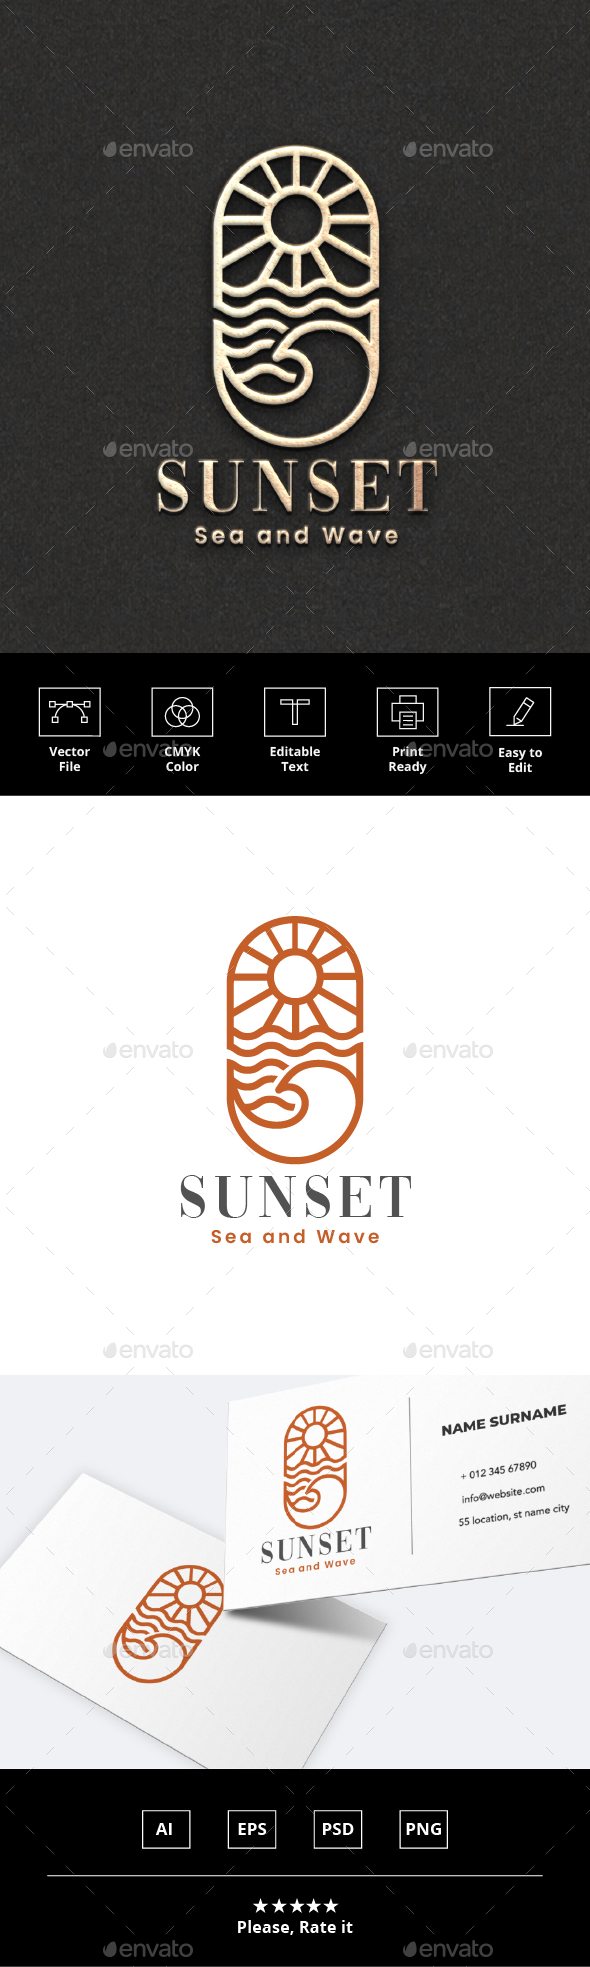 Sunset - Sea and Wave Logo